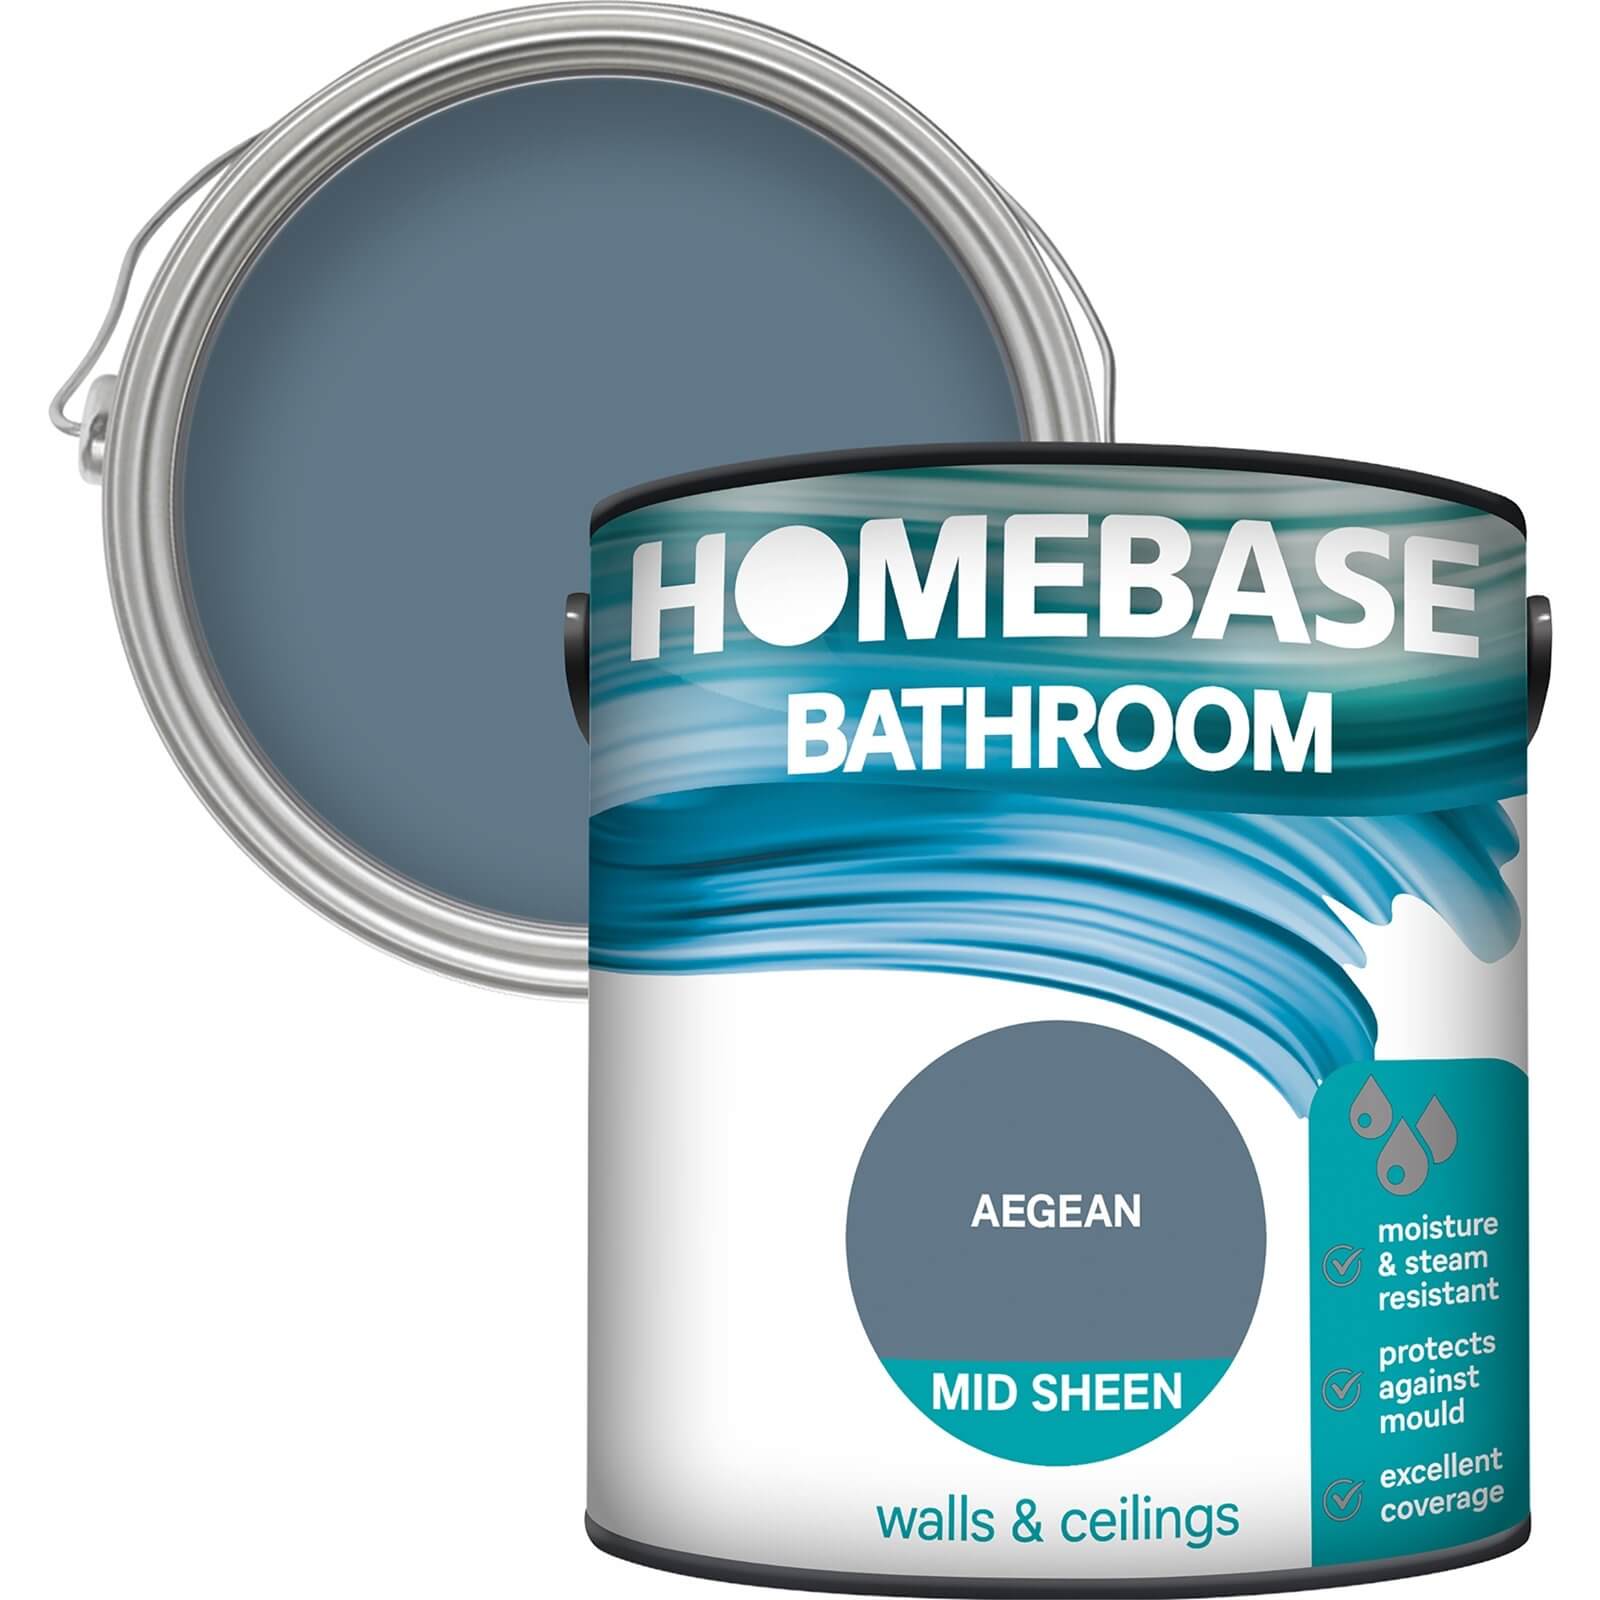 Homebase Bathroom Mid Sheen Paint - Aegean 2.5L